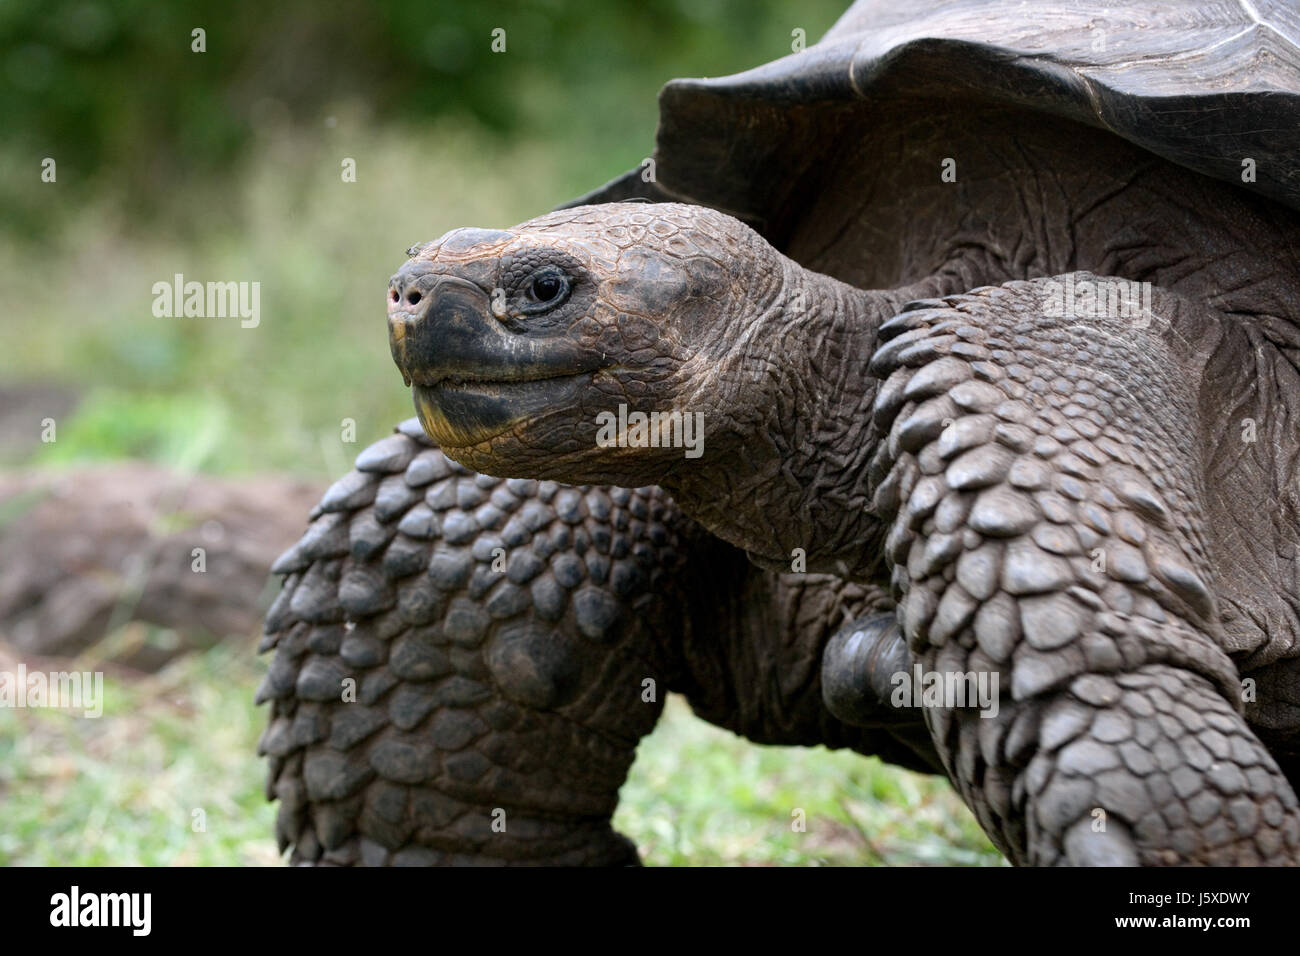 Portrait of giant tortoises. The Galapagos Islands. Pacific Ocean. Ecuador. Stock Photo